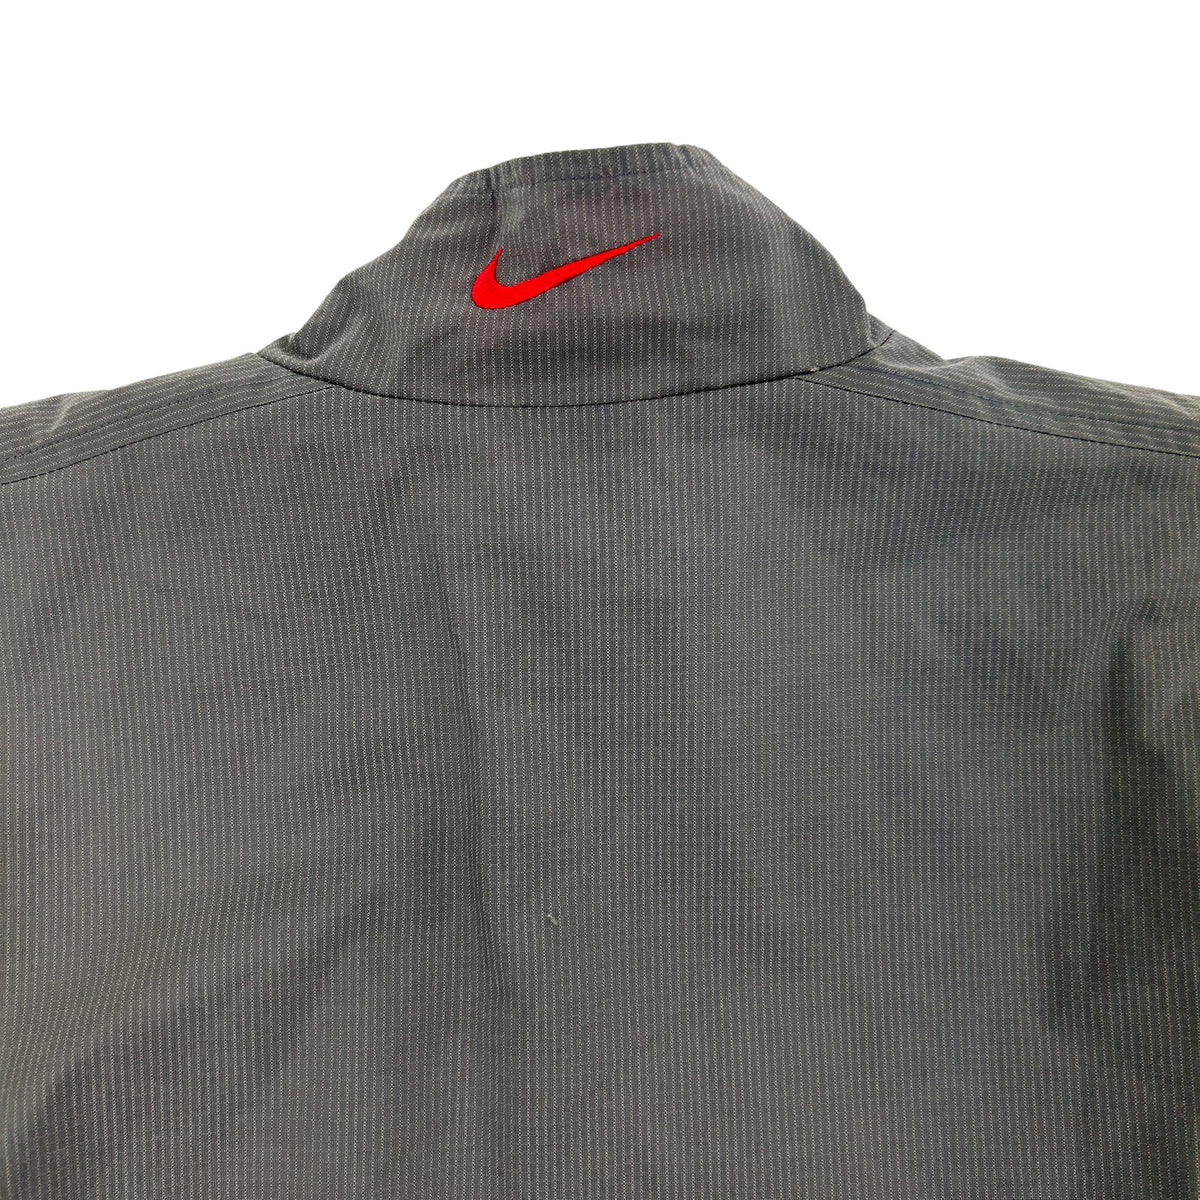 Vintage Nike Hex Asymmetrical Zip Jacket Size M